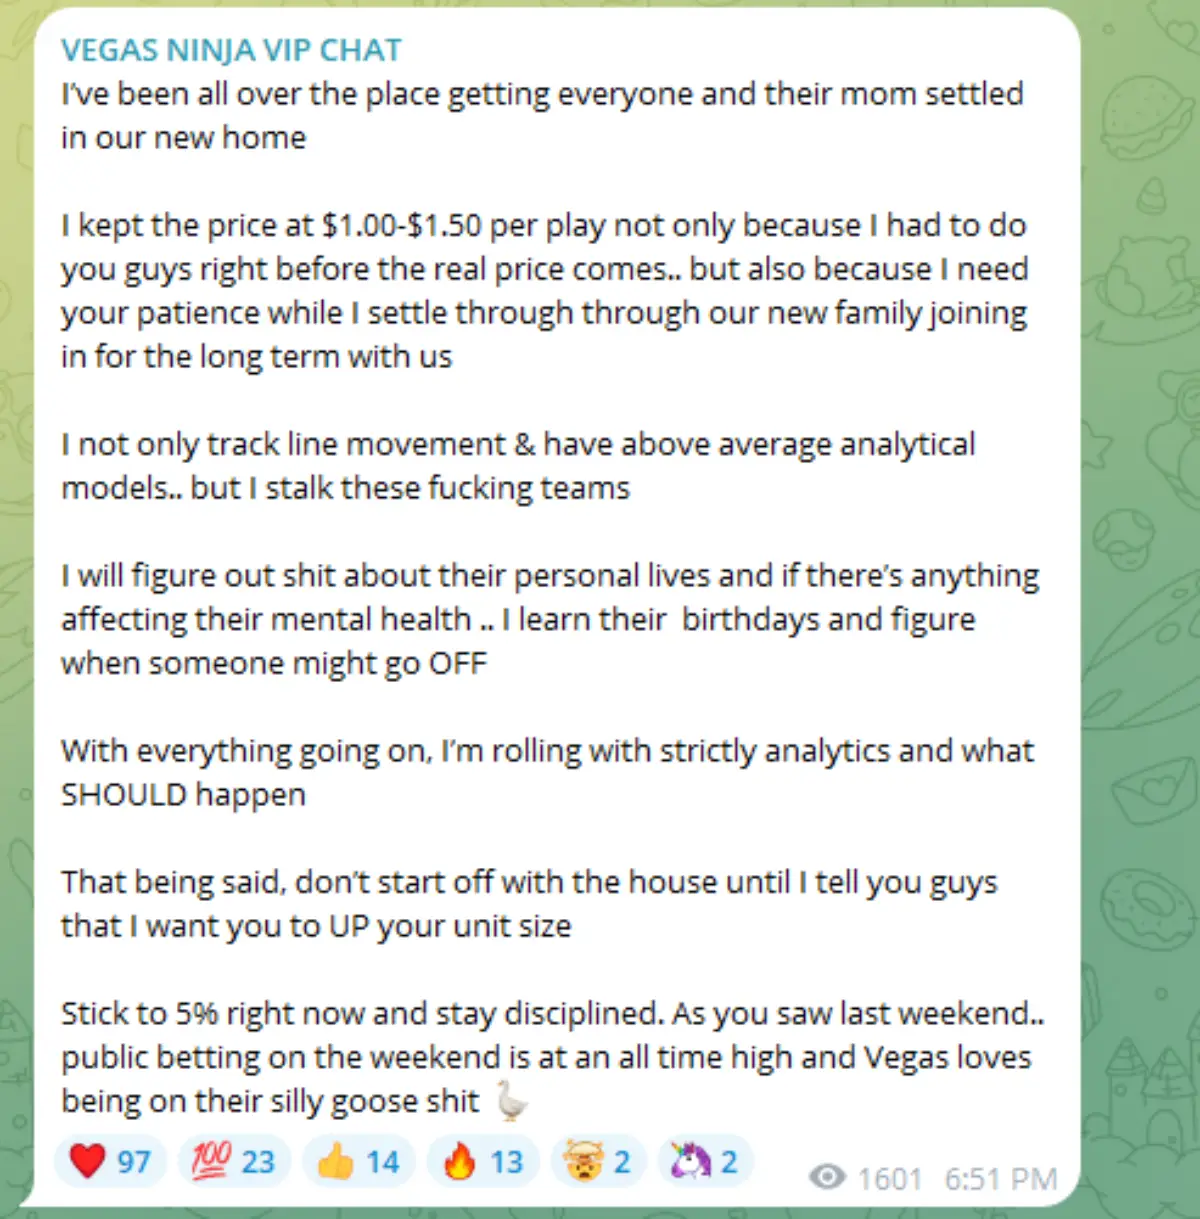 The Vegas ninja VIP telegram chat